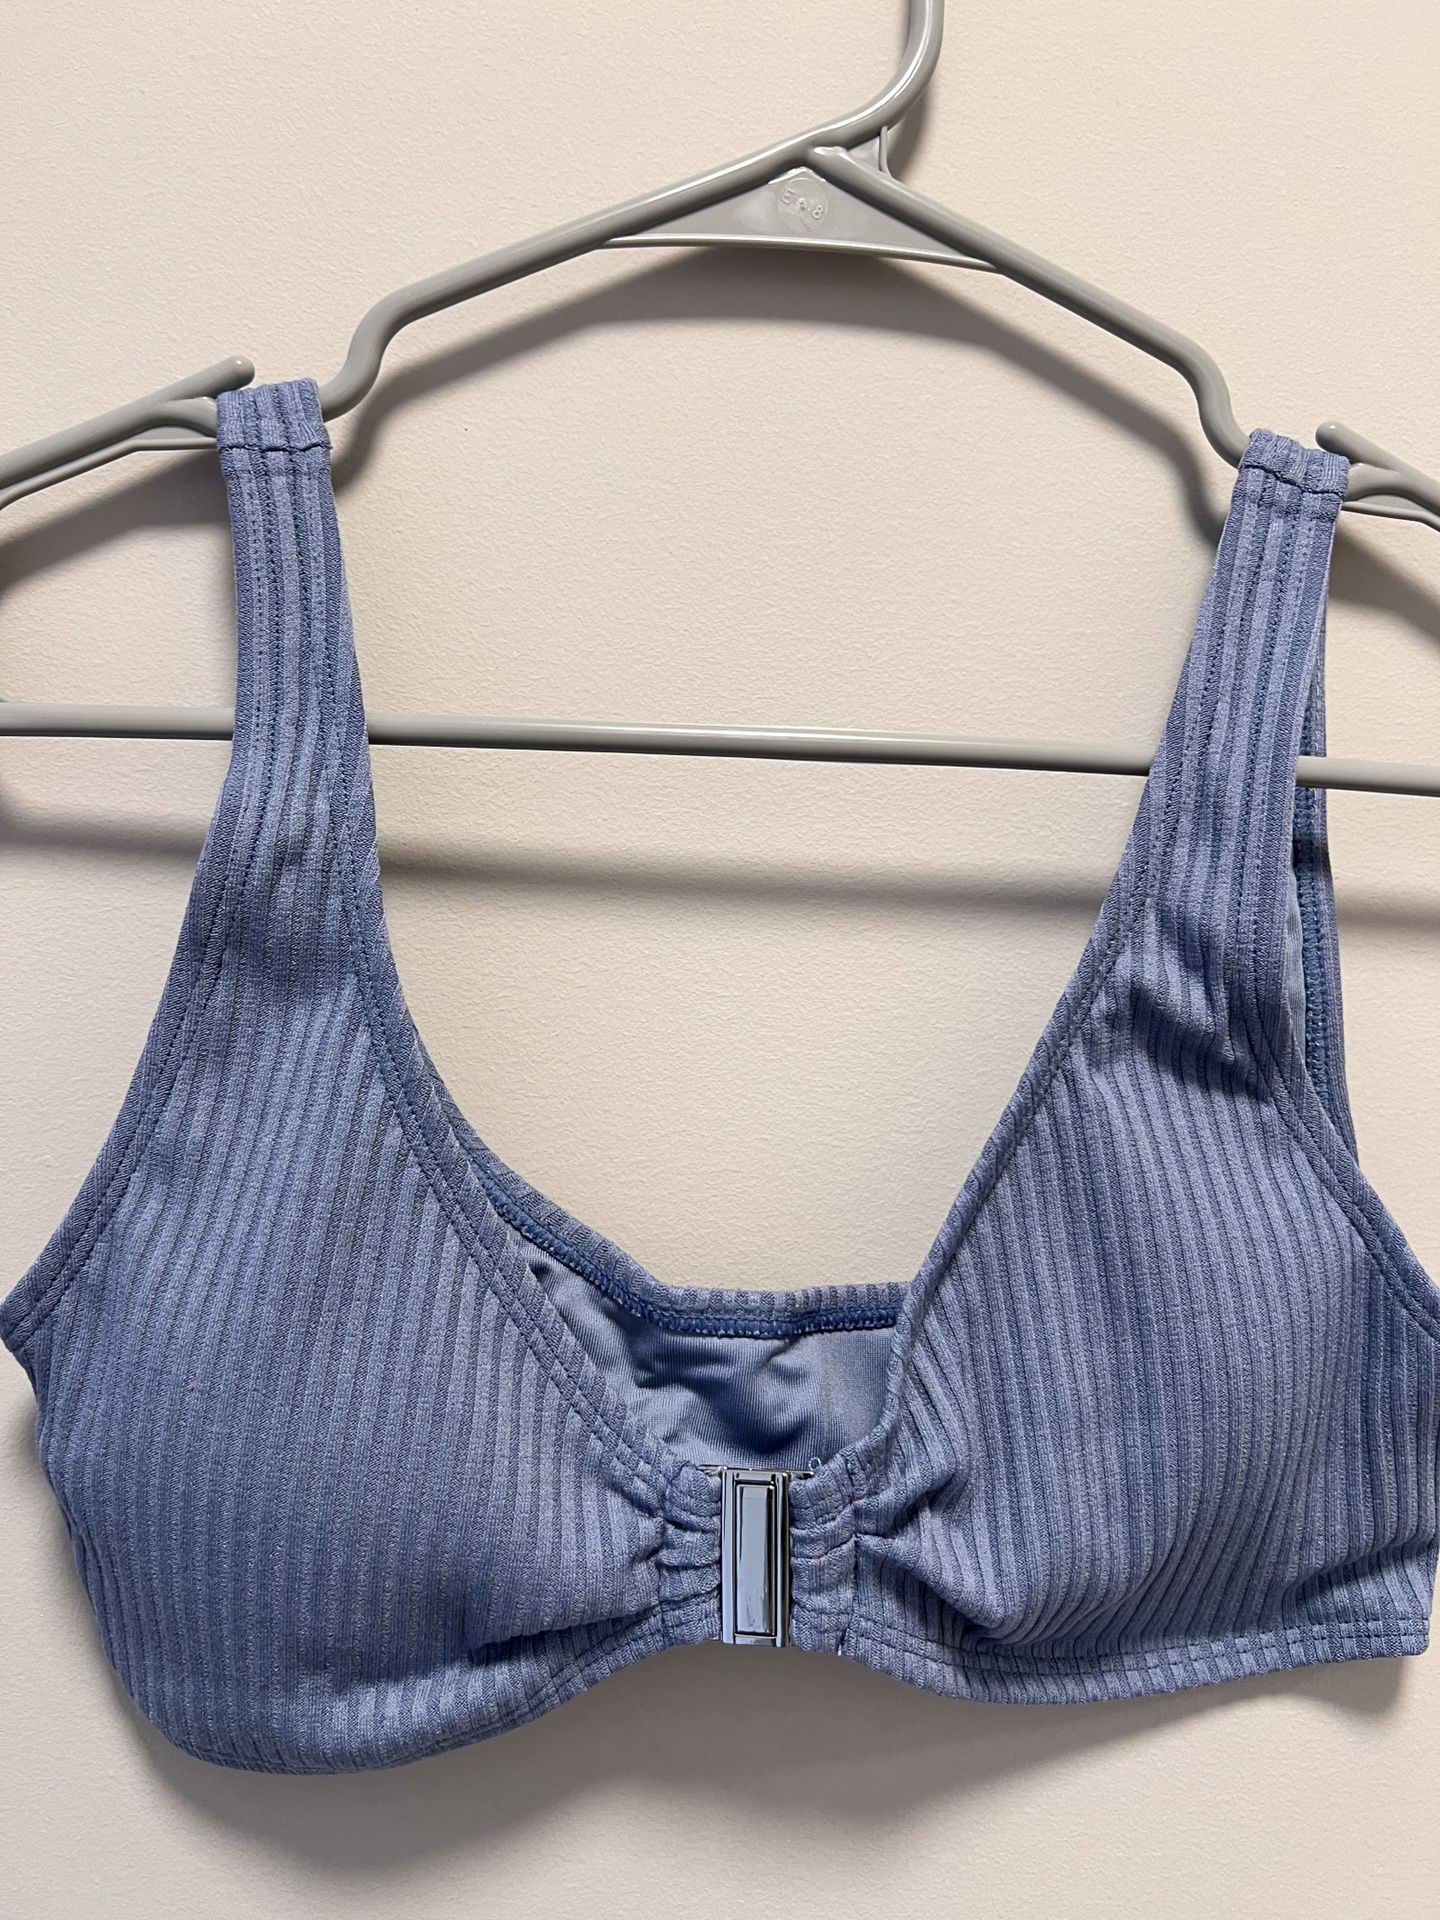 Women’ 2 Piece Ribbed Bikini Sets Wide Straps High Cut Bathing Suit Blue Grey